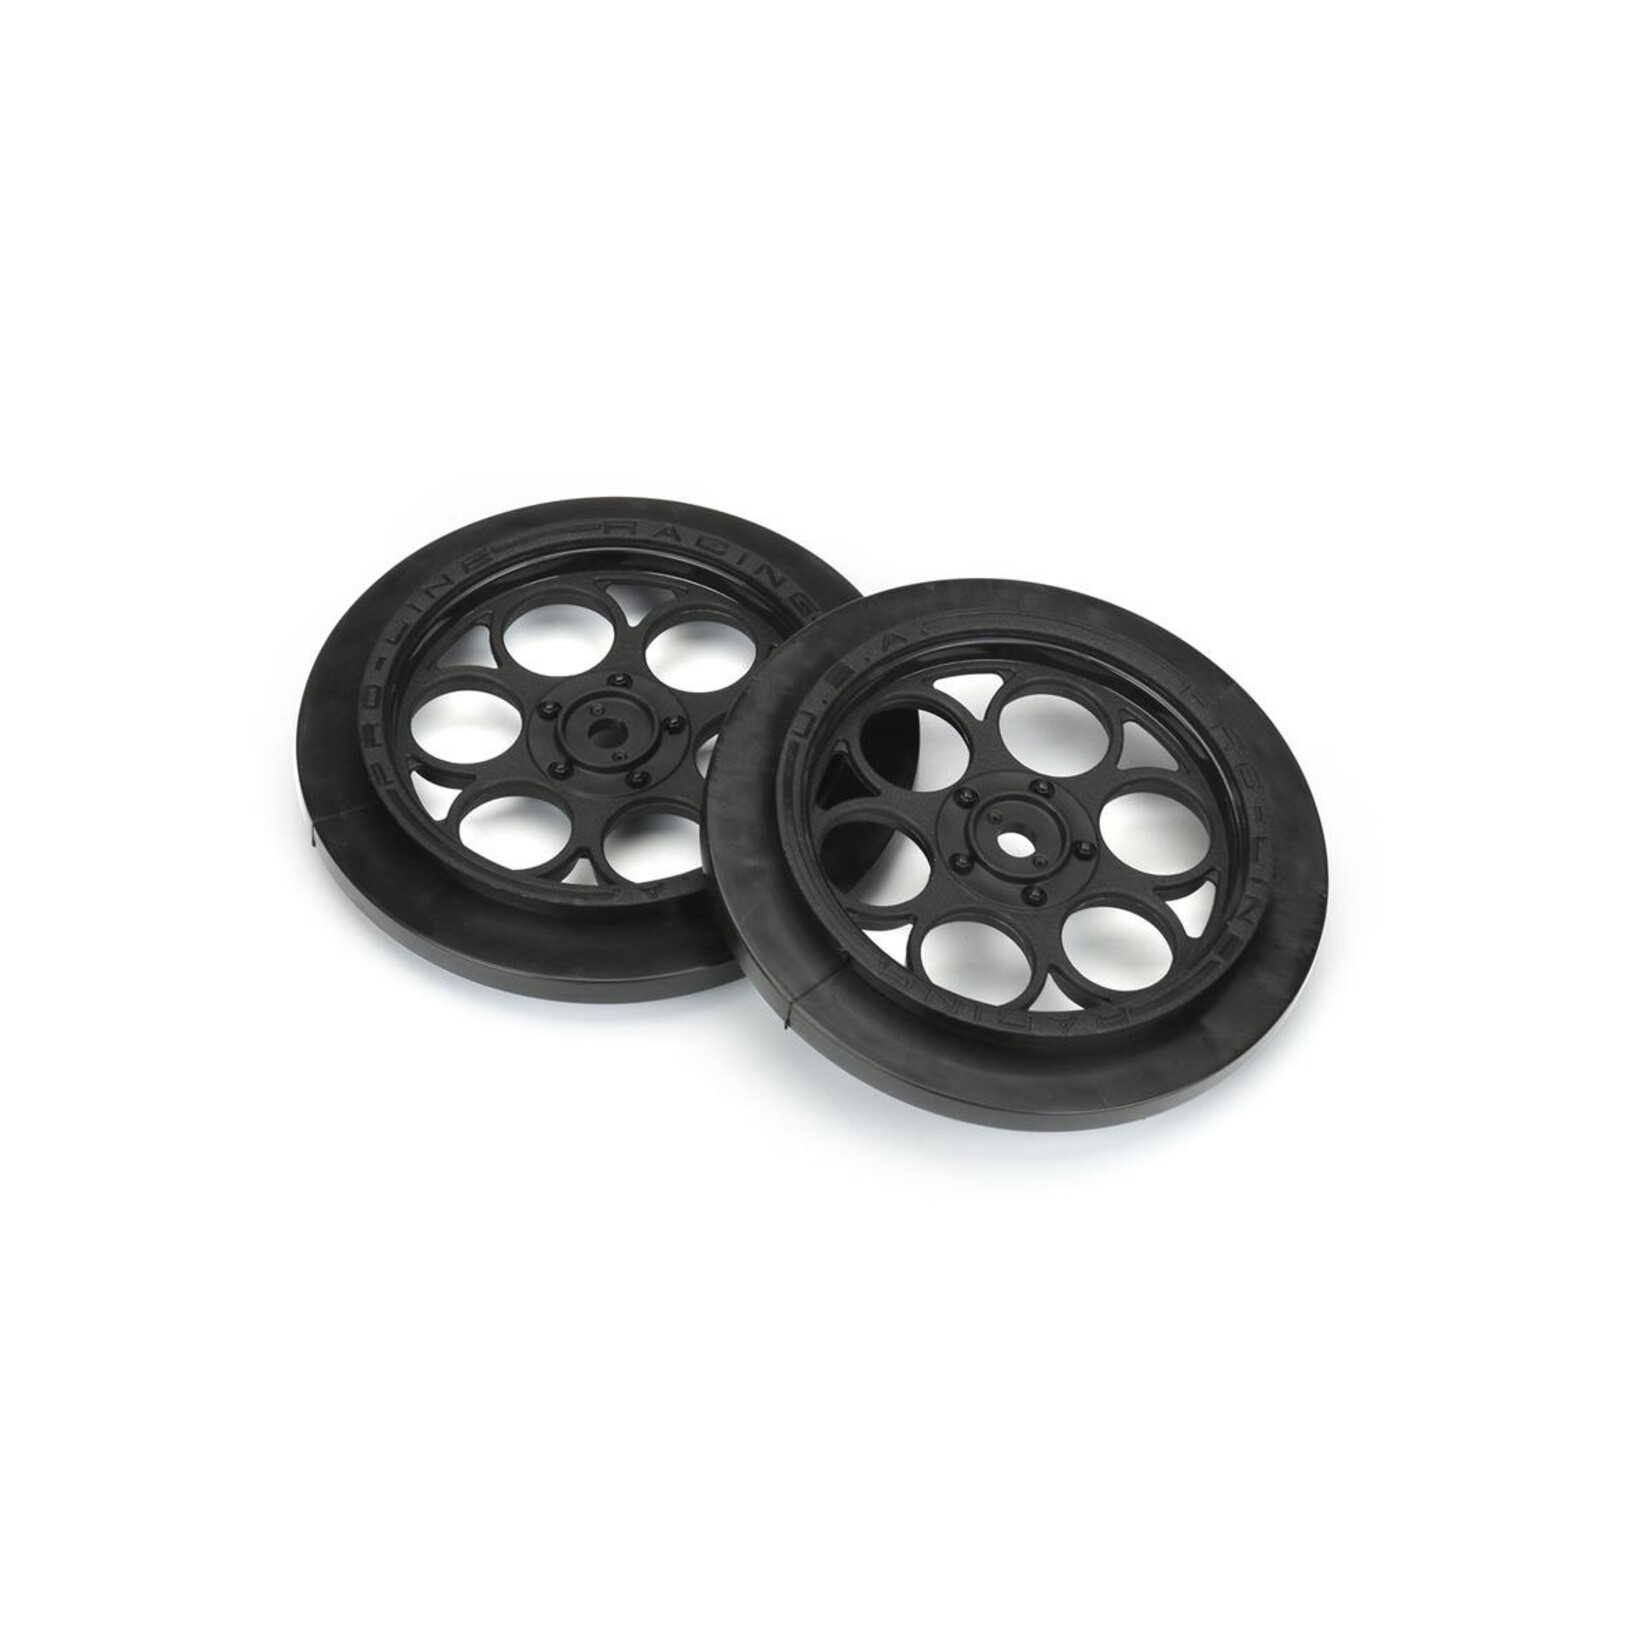 Pro-Line Pro-Line Showtime Front Drag Racing Wheels w/12mm Hex (Black) (2) #2803-03